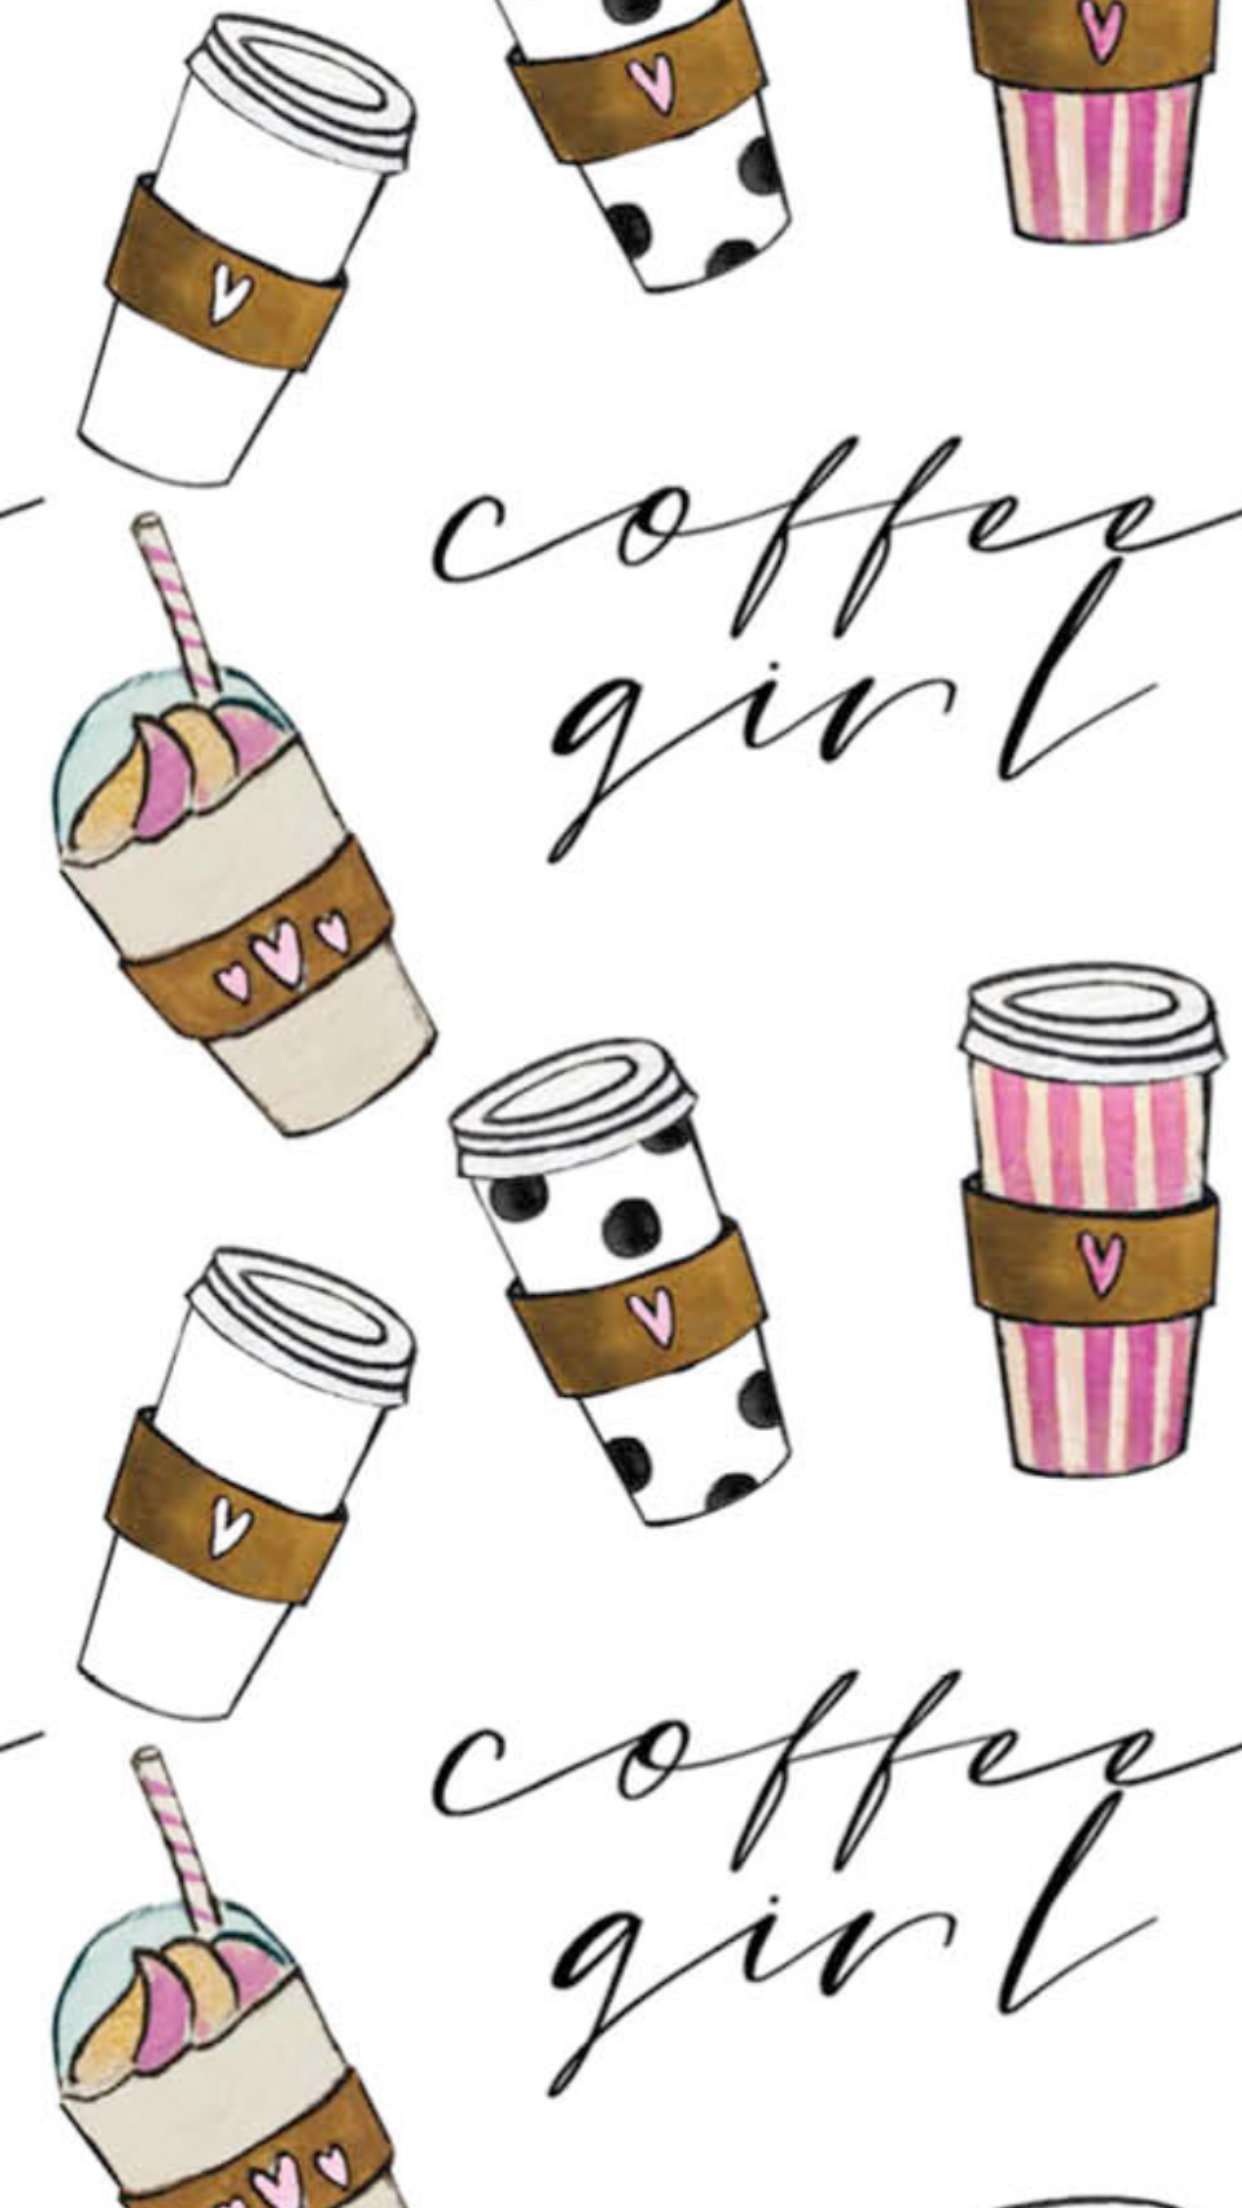 Coffee girl wallpaper. Girl wallpaper, Sassy wallpaper, Coffee wallpaper